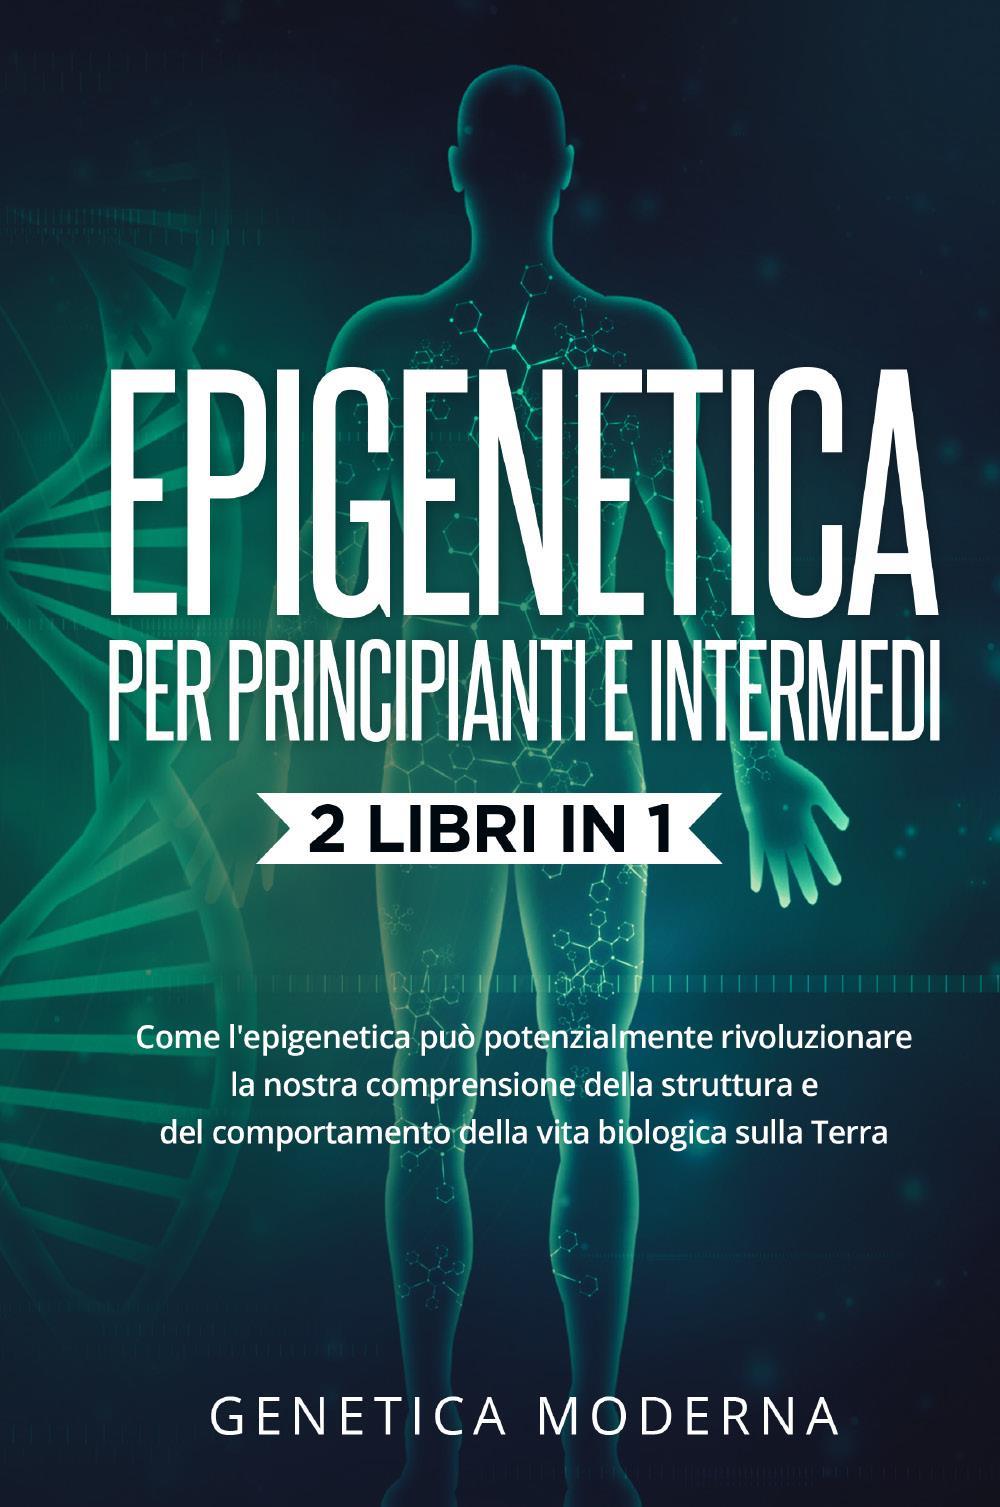 Epigenetica  Per Principianti e Intermedi (2 Libri in 1)